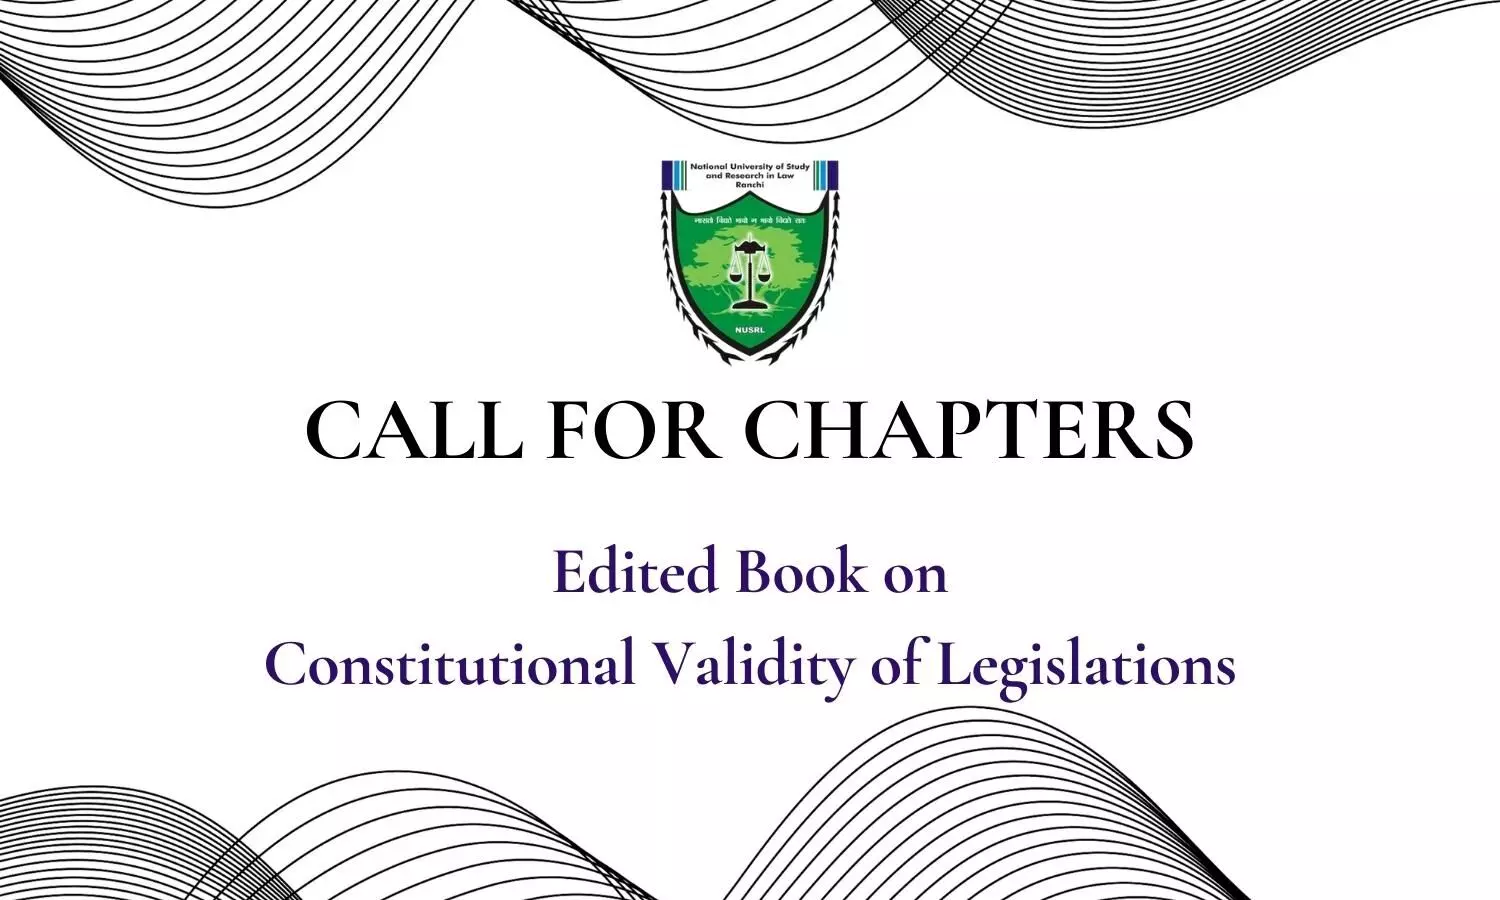 Edited Book on Constitutional Validity of Legislations